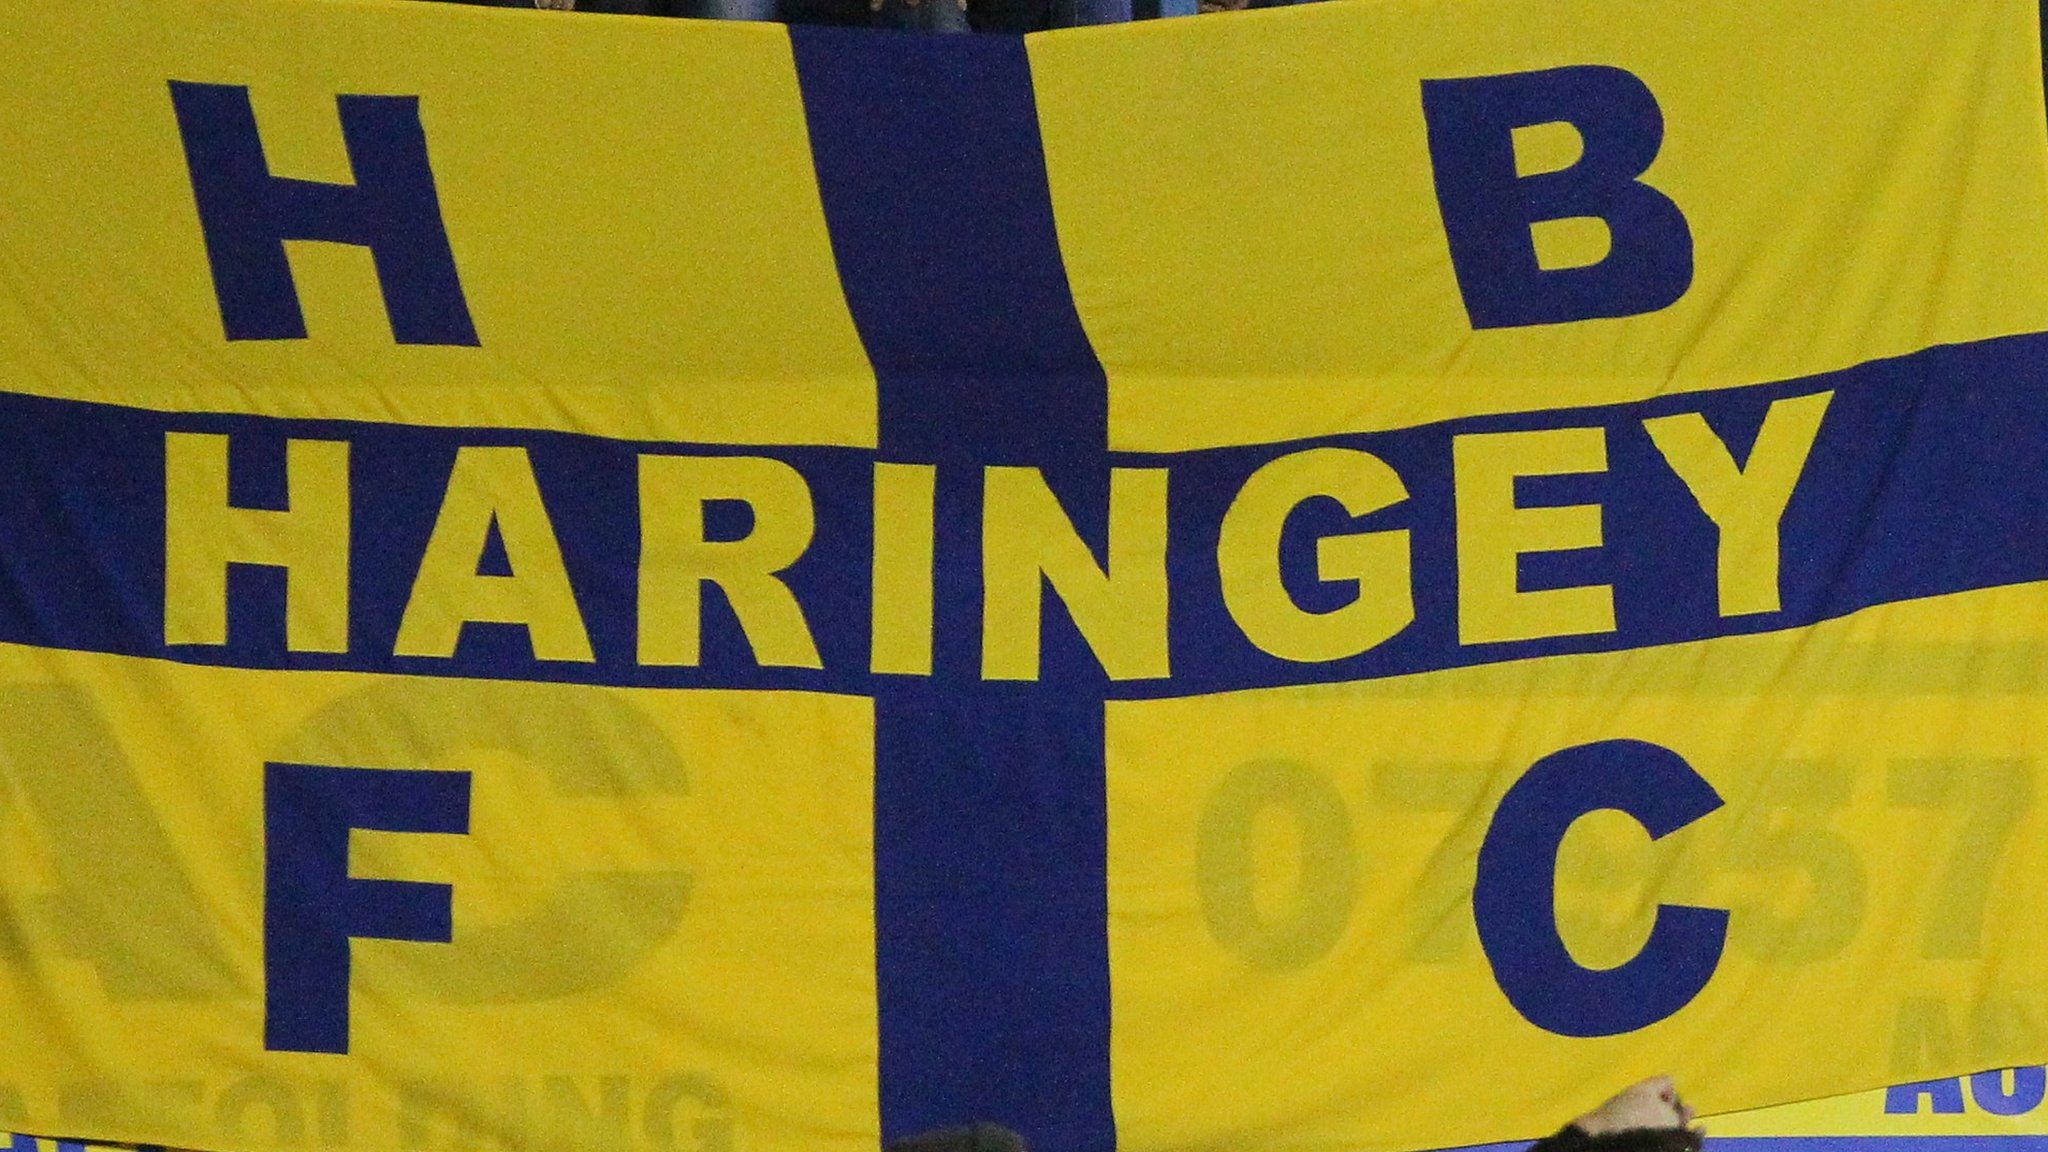 Haringey Borough flag